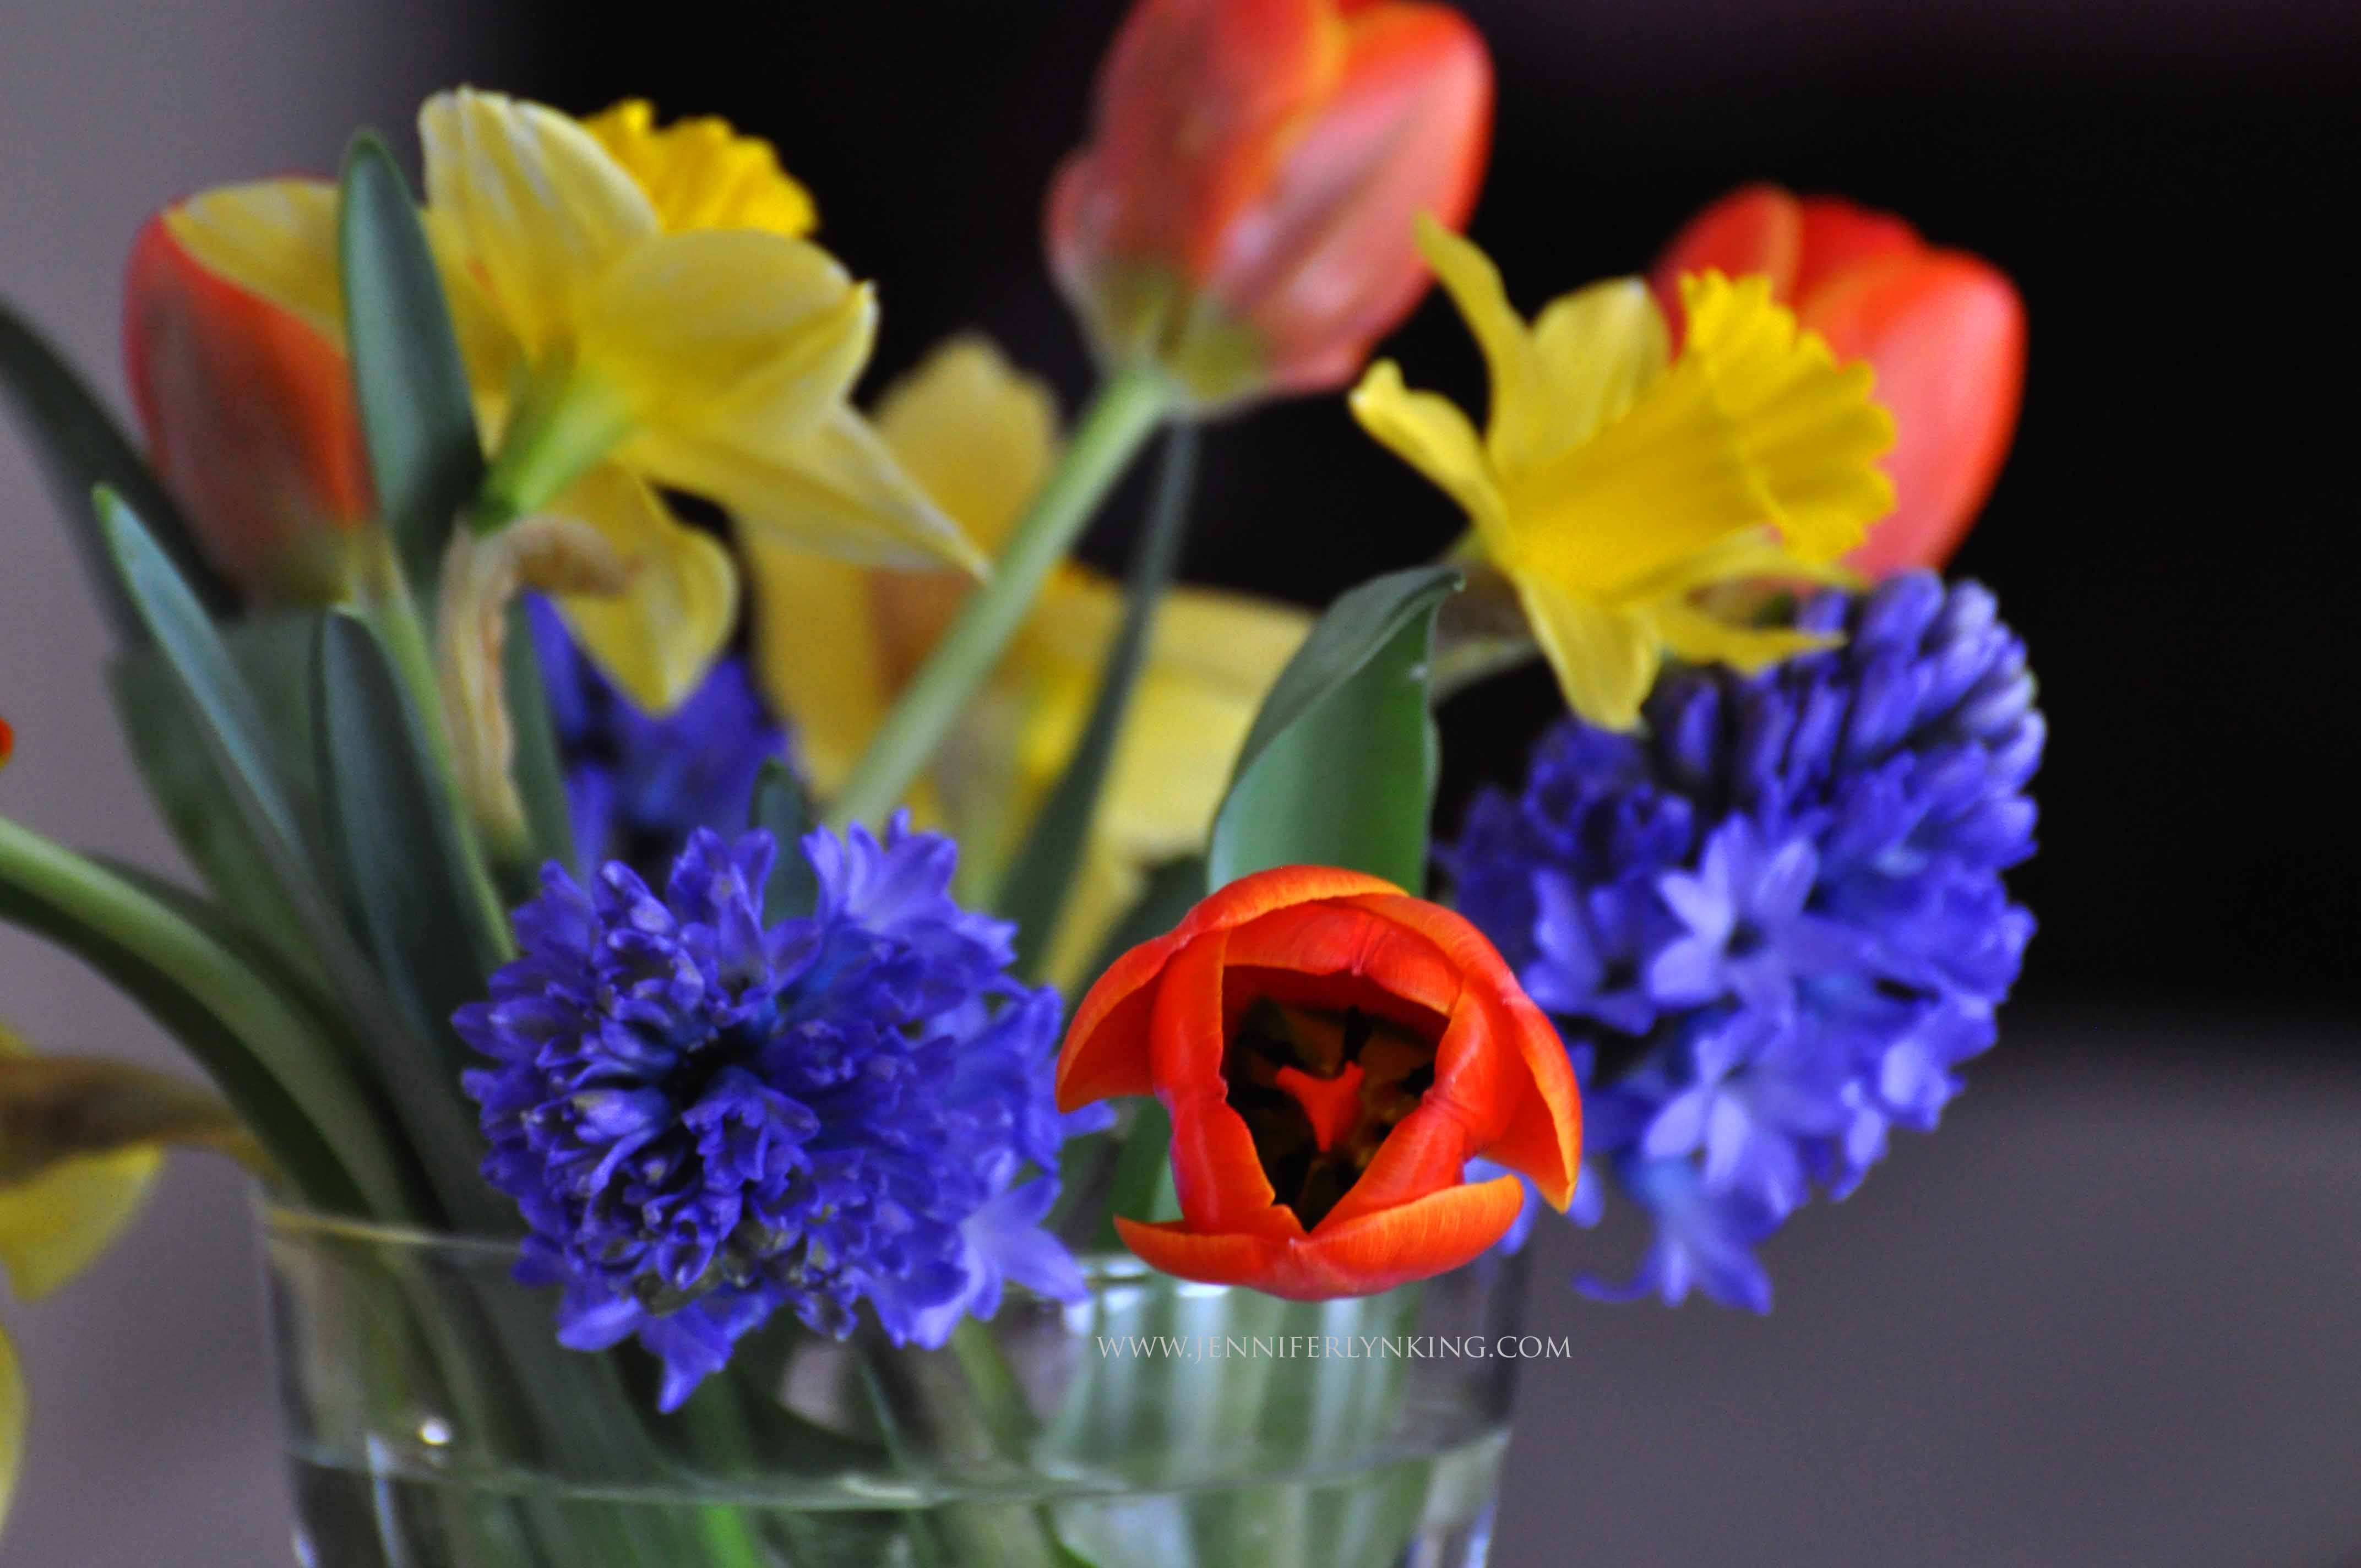 Daffodils, Hyacinths, and Tulips